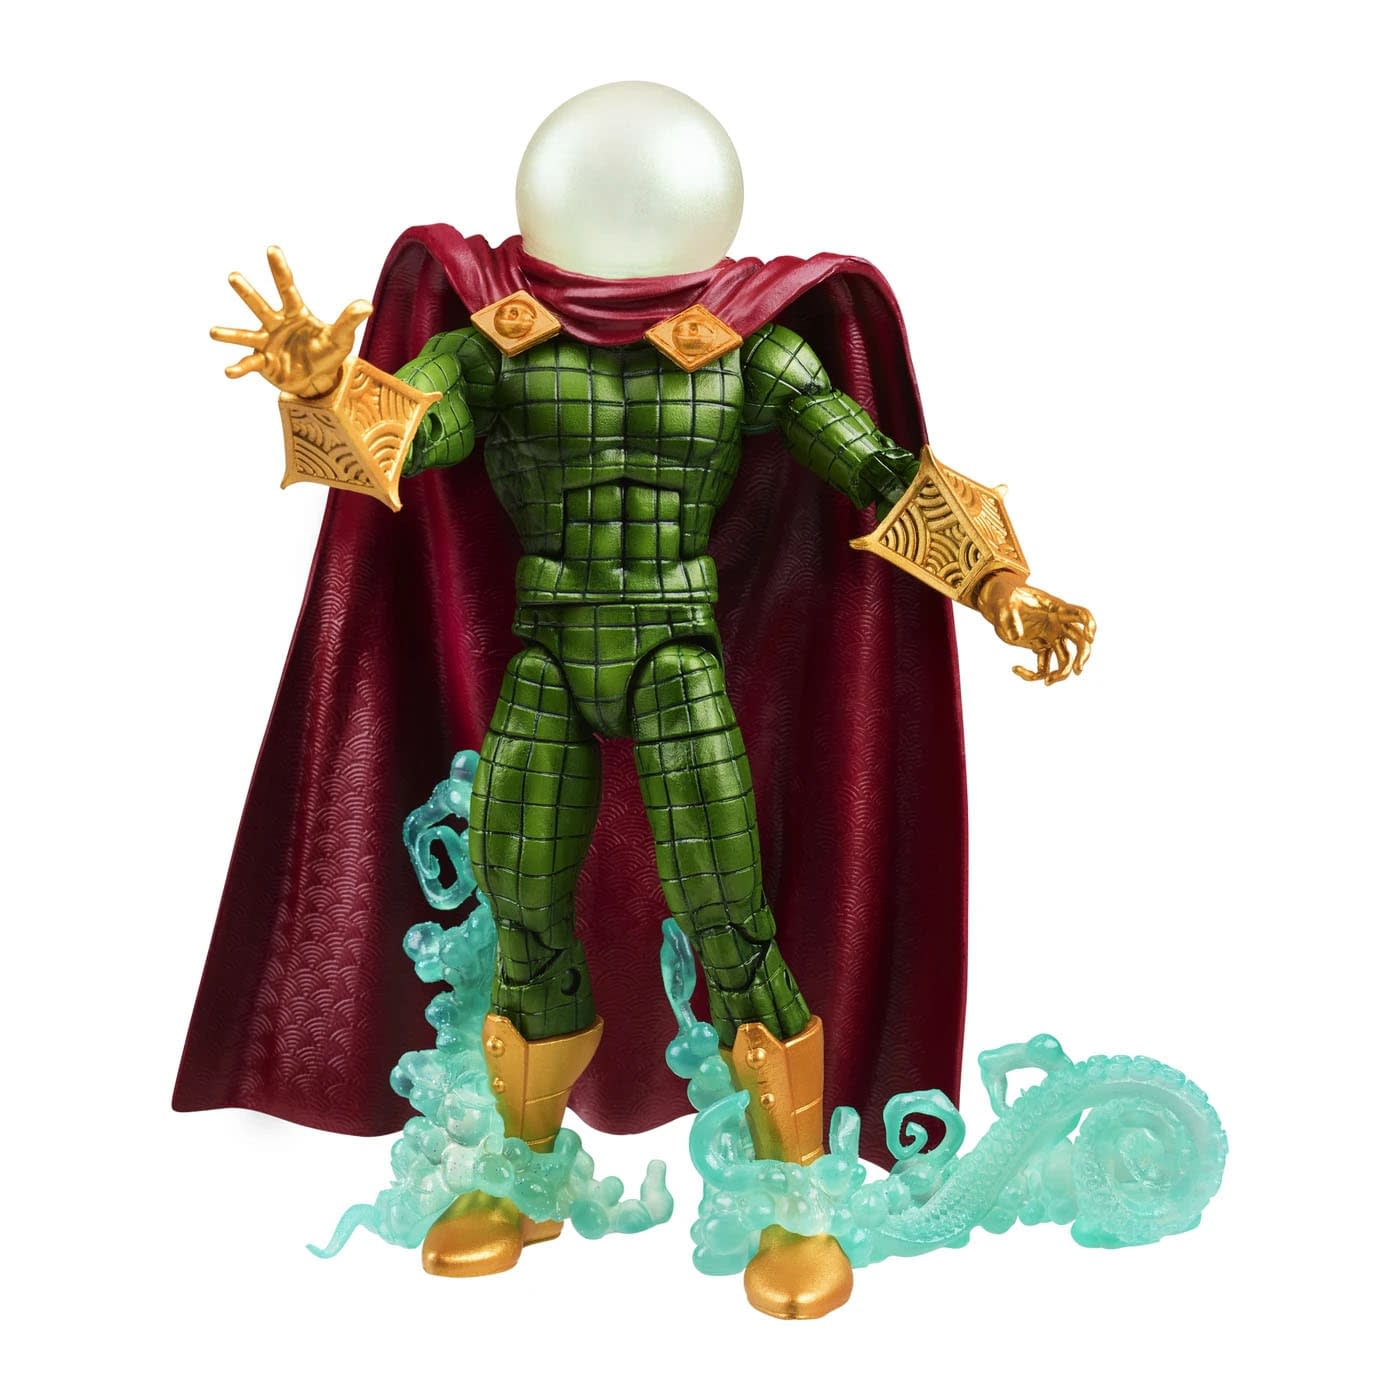 Marvel Legends Vintage Collection Retro Mysterio Figure Design Photo Credit from Hasbro